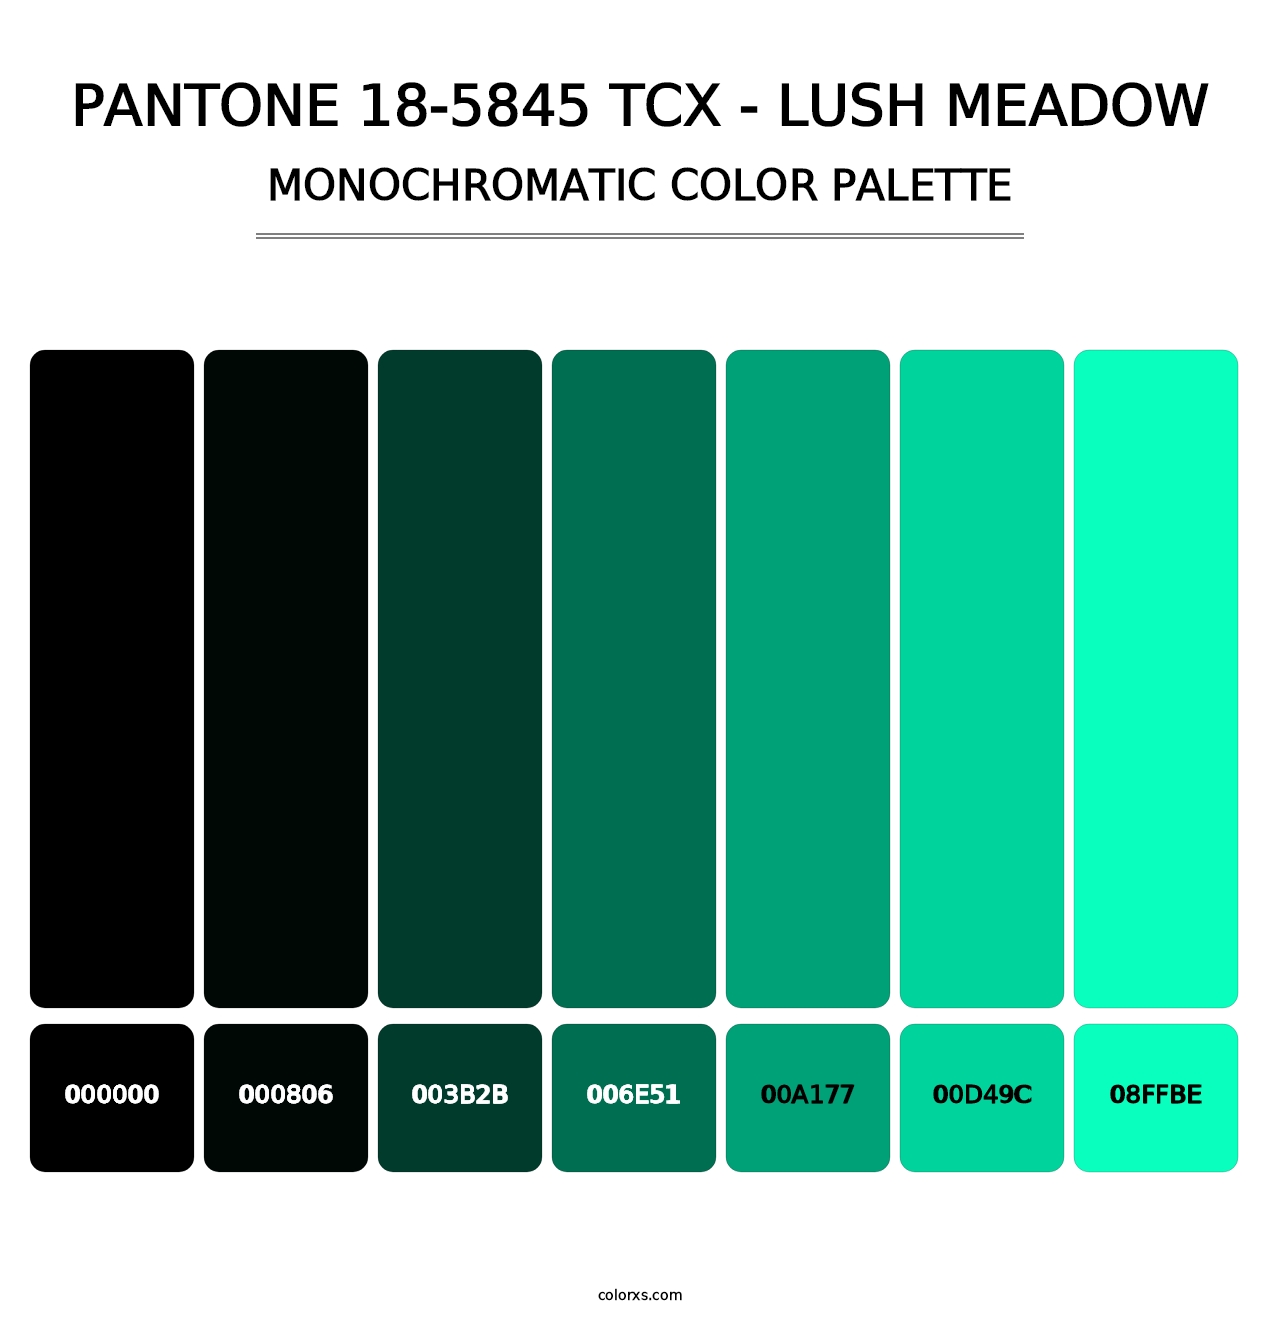 PANTONE 18-5845 TCX - Lush Meadow - Monochromatic Color Palette